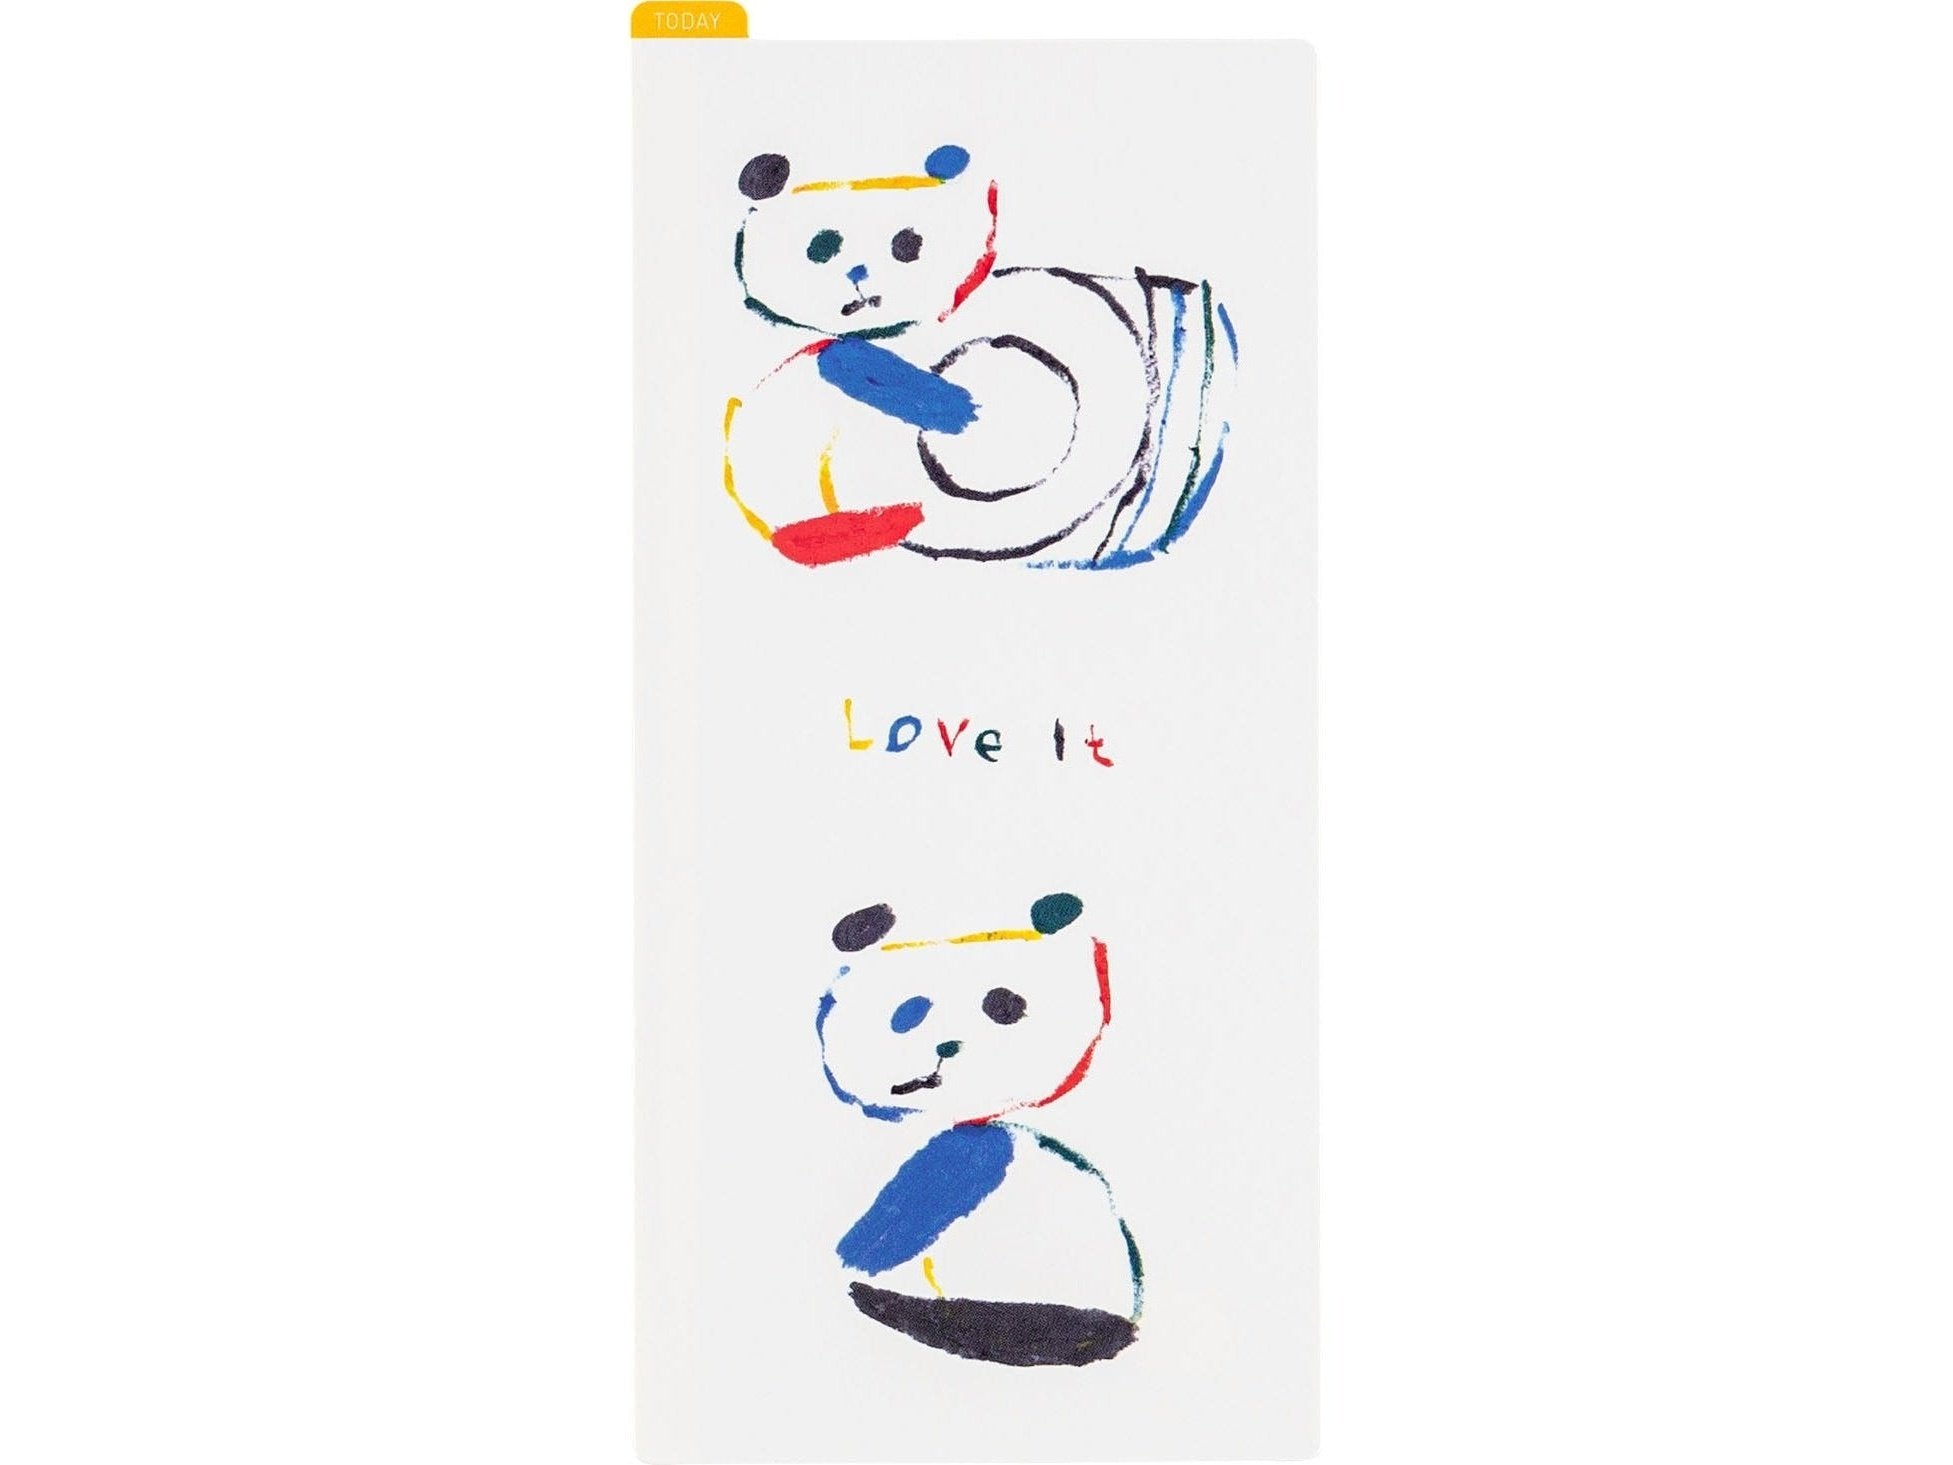 Hobonichi Techo Jin Kitamura: Hobonichi Pencil Board for Weeks (Love it (Panda))